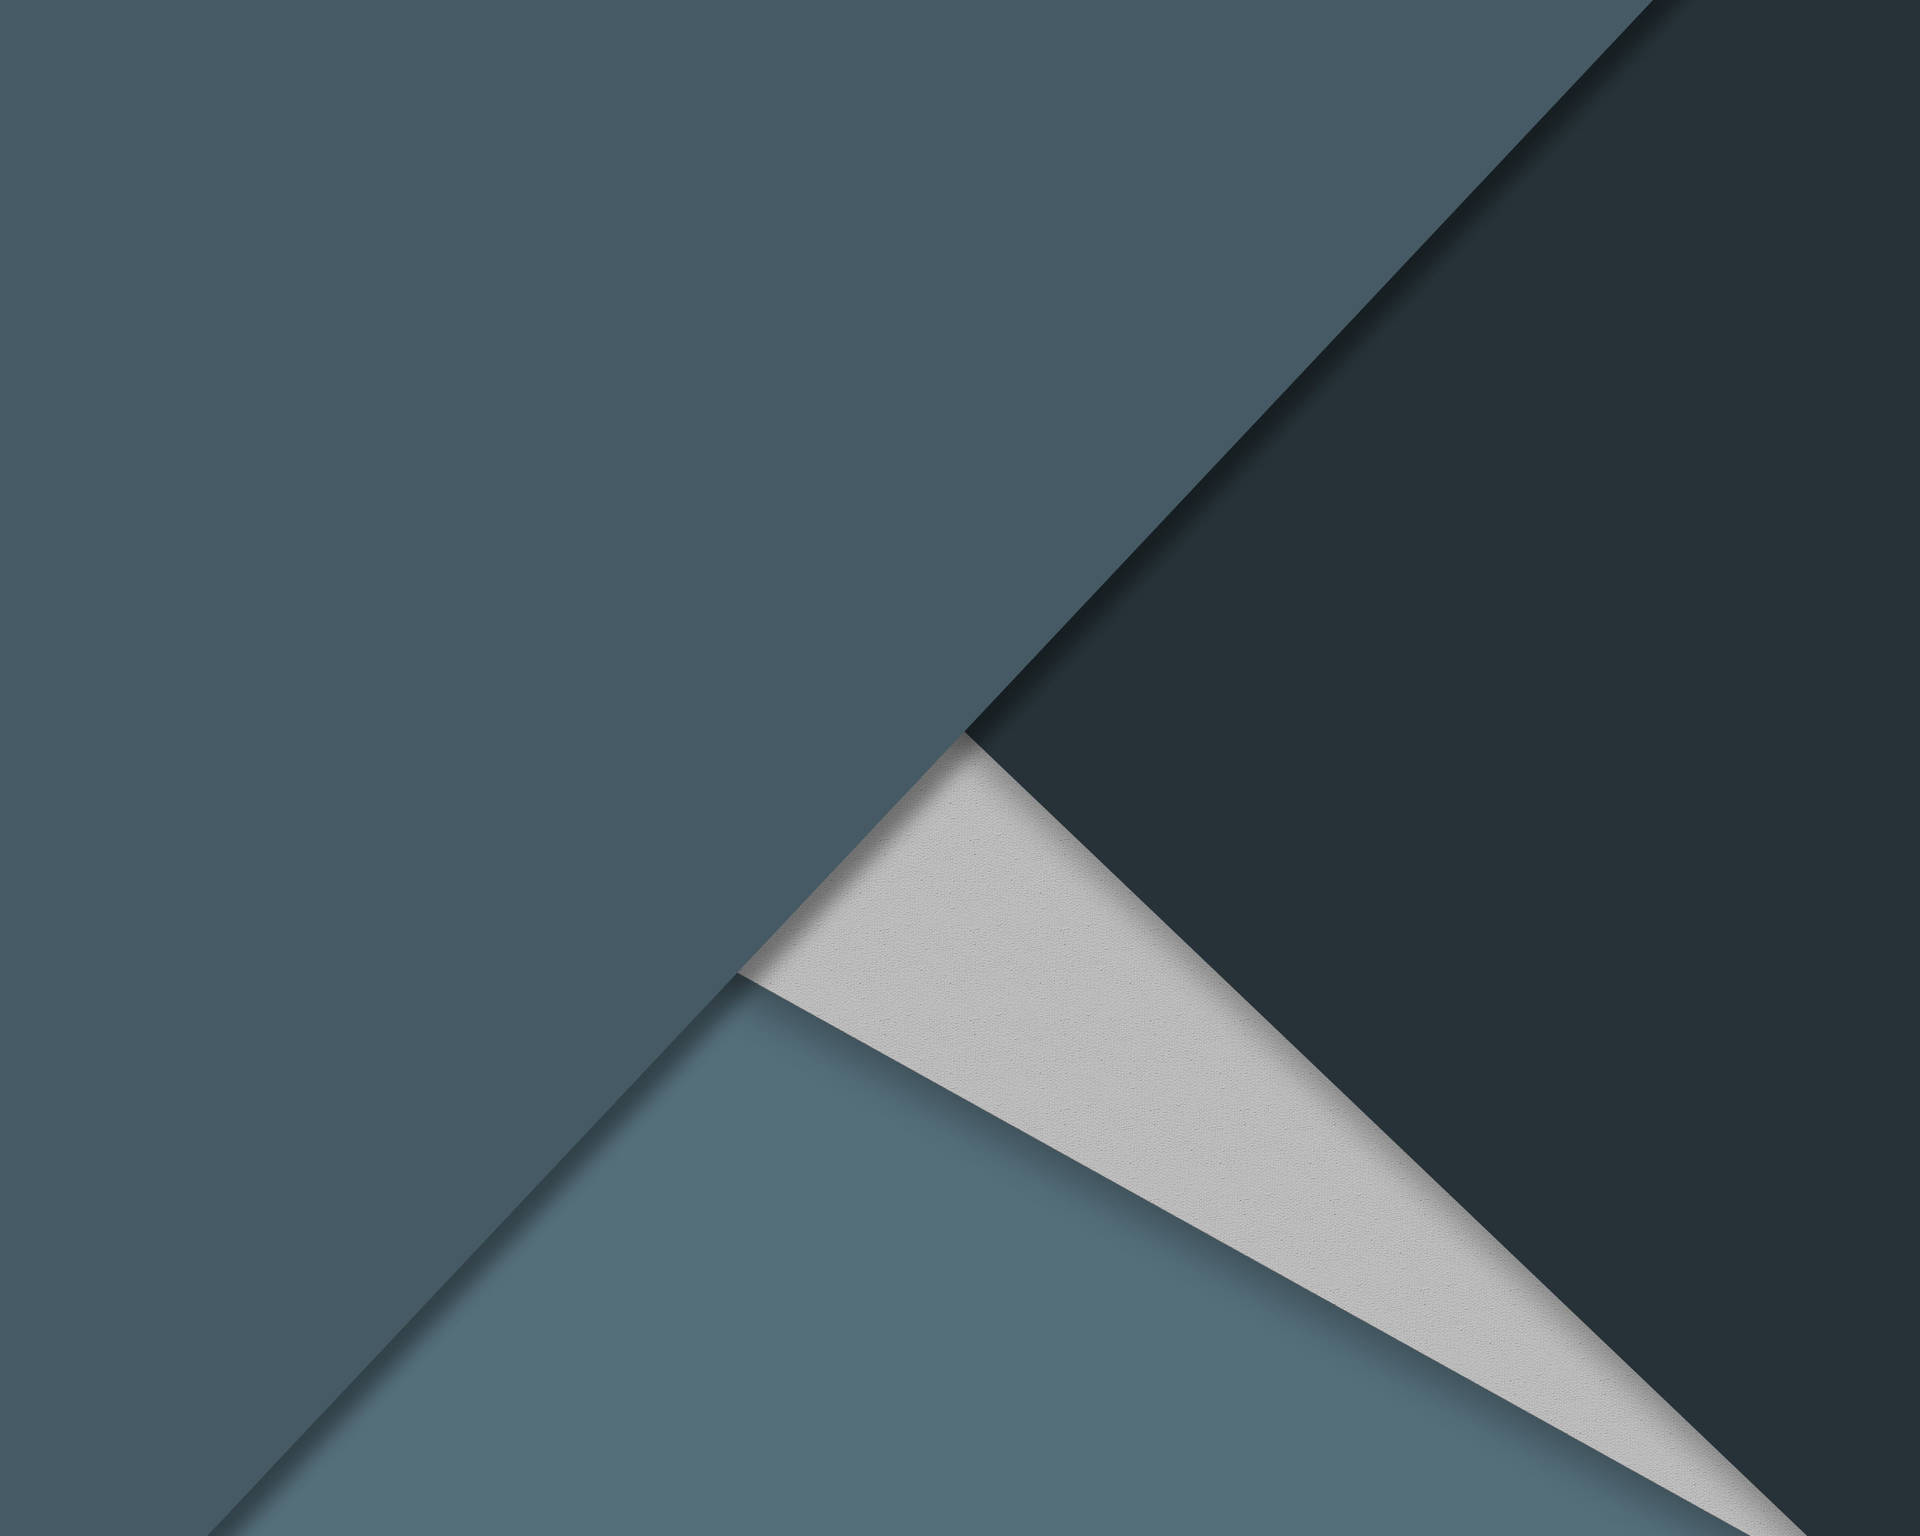 Abstract Gray Shapes Material Design Wallpaper